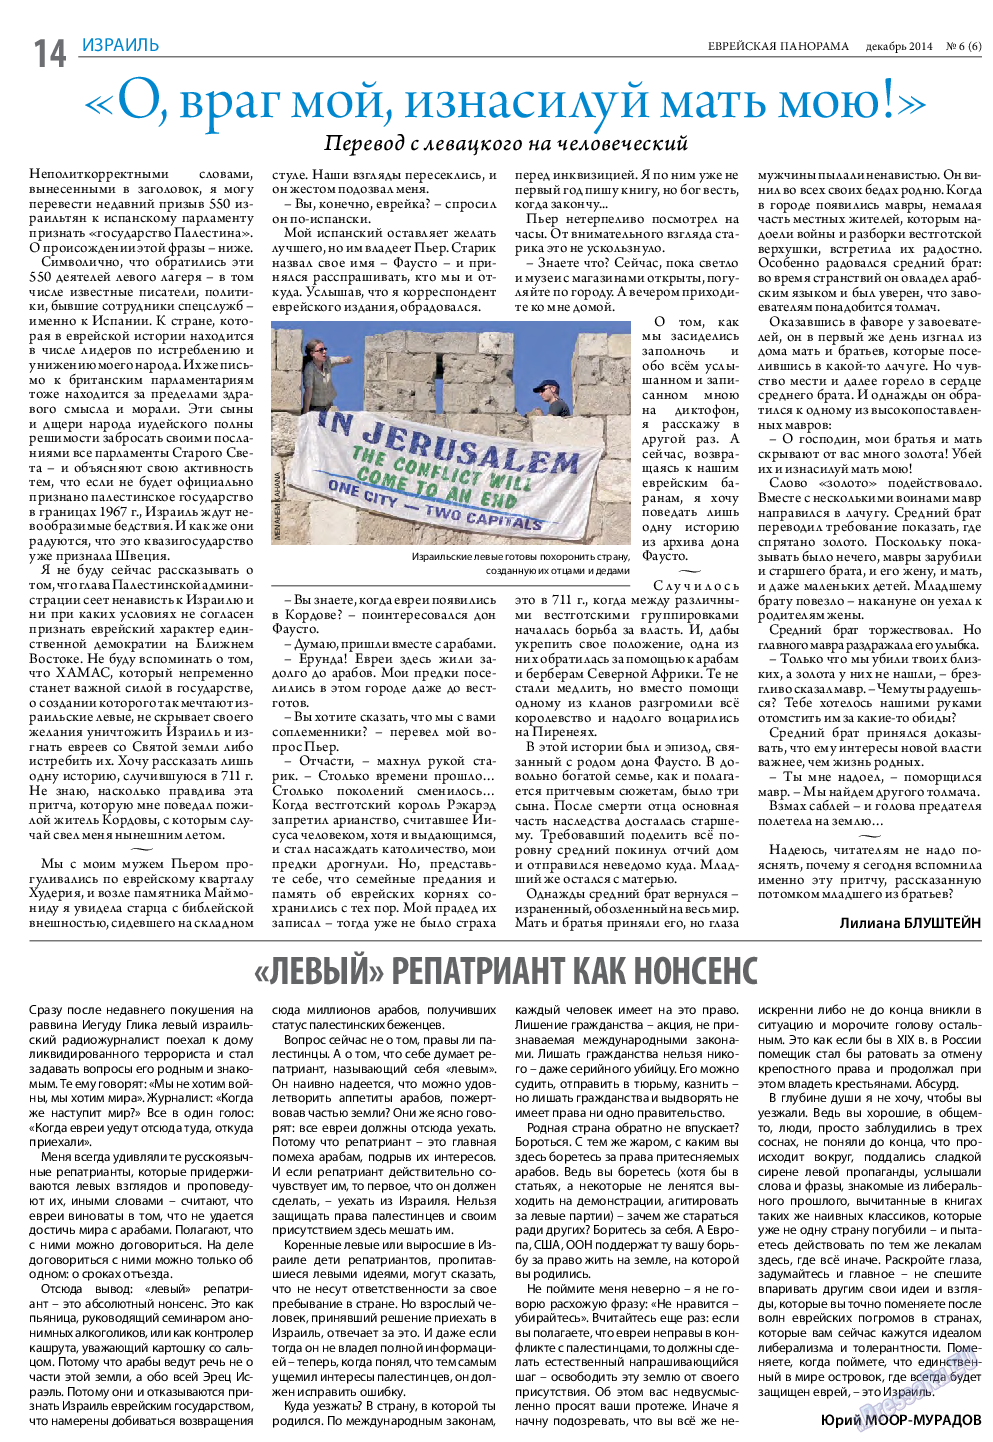 Еврейская панорама, газета. 2014 №6 стр.14